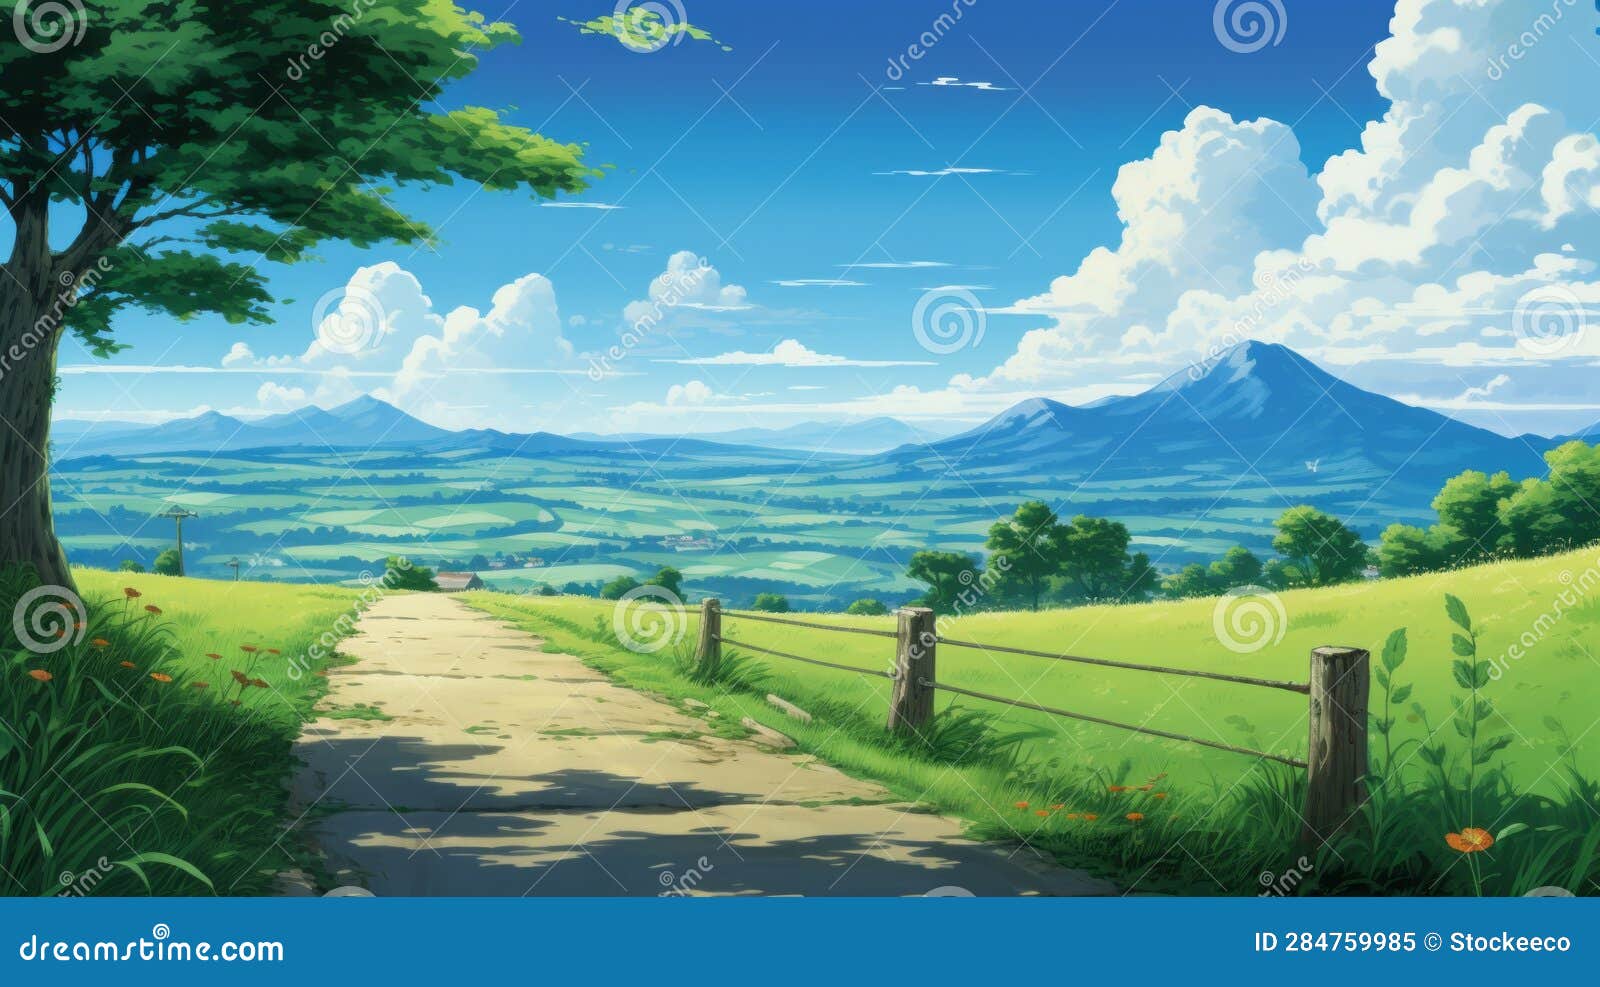 Custom background anime landscape Art Commission | Sketchmob-demhanvico.com.vn